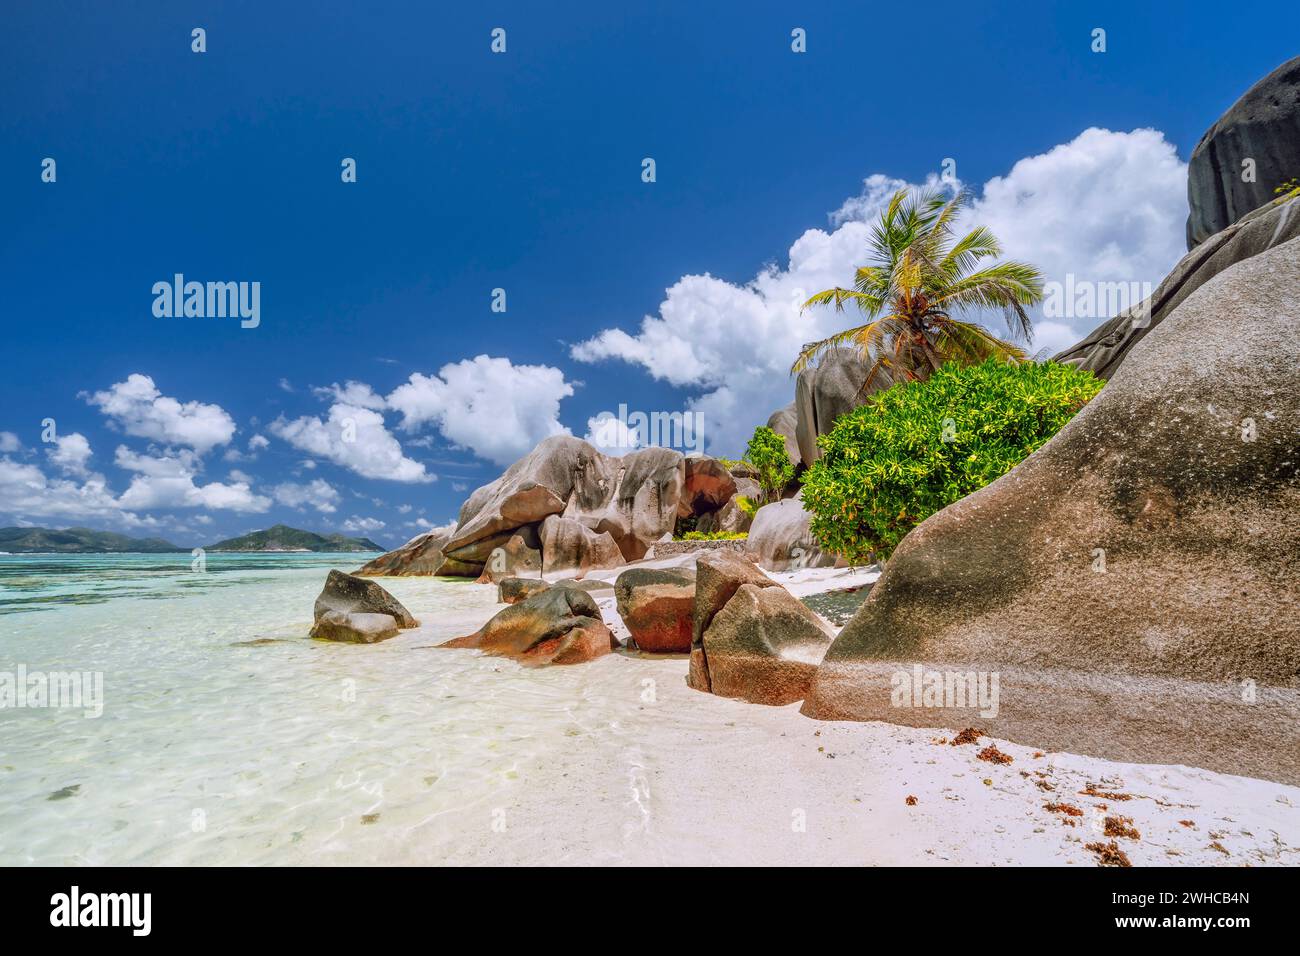 Anse Source d'Argent. Spiaggia esotica paradisiaca sull'isola la Digue alle Seychelles. Foto Stock